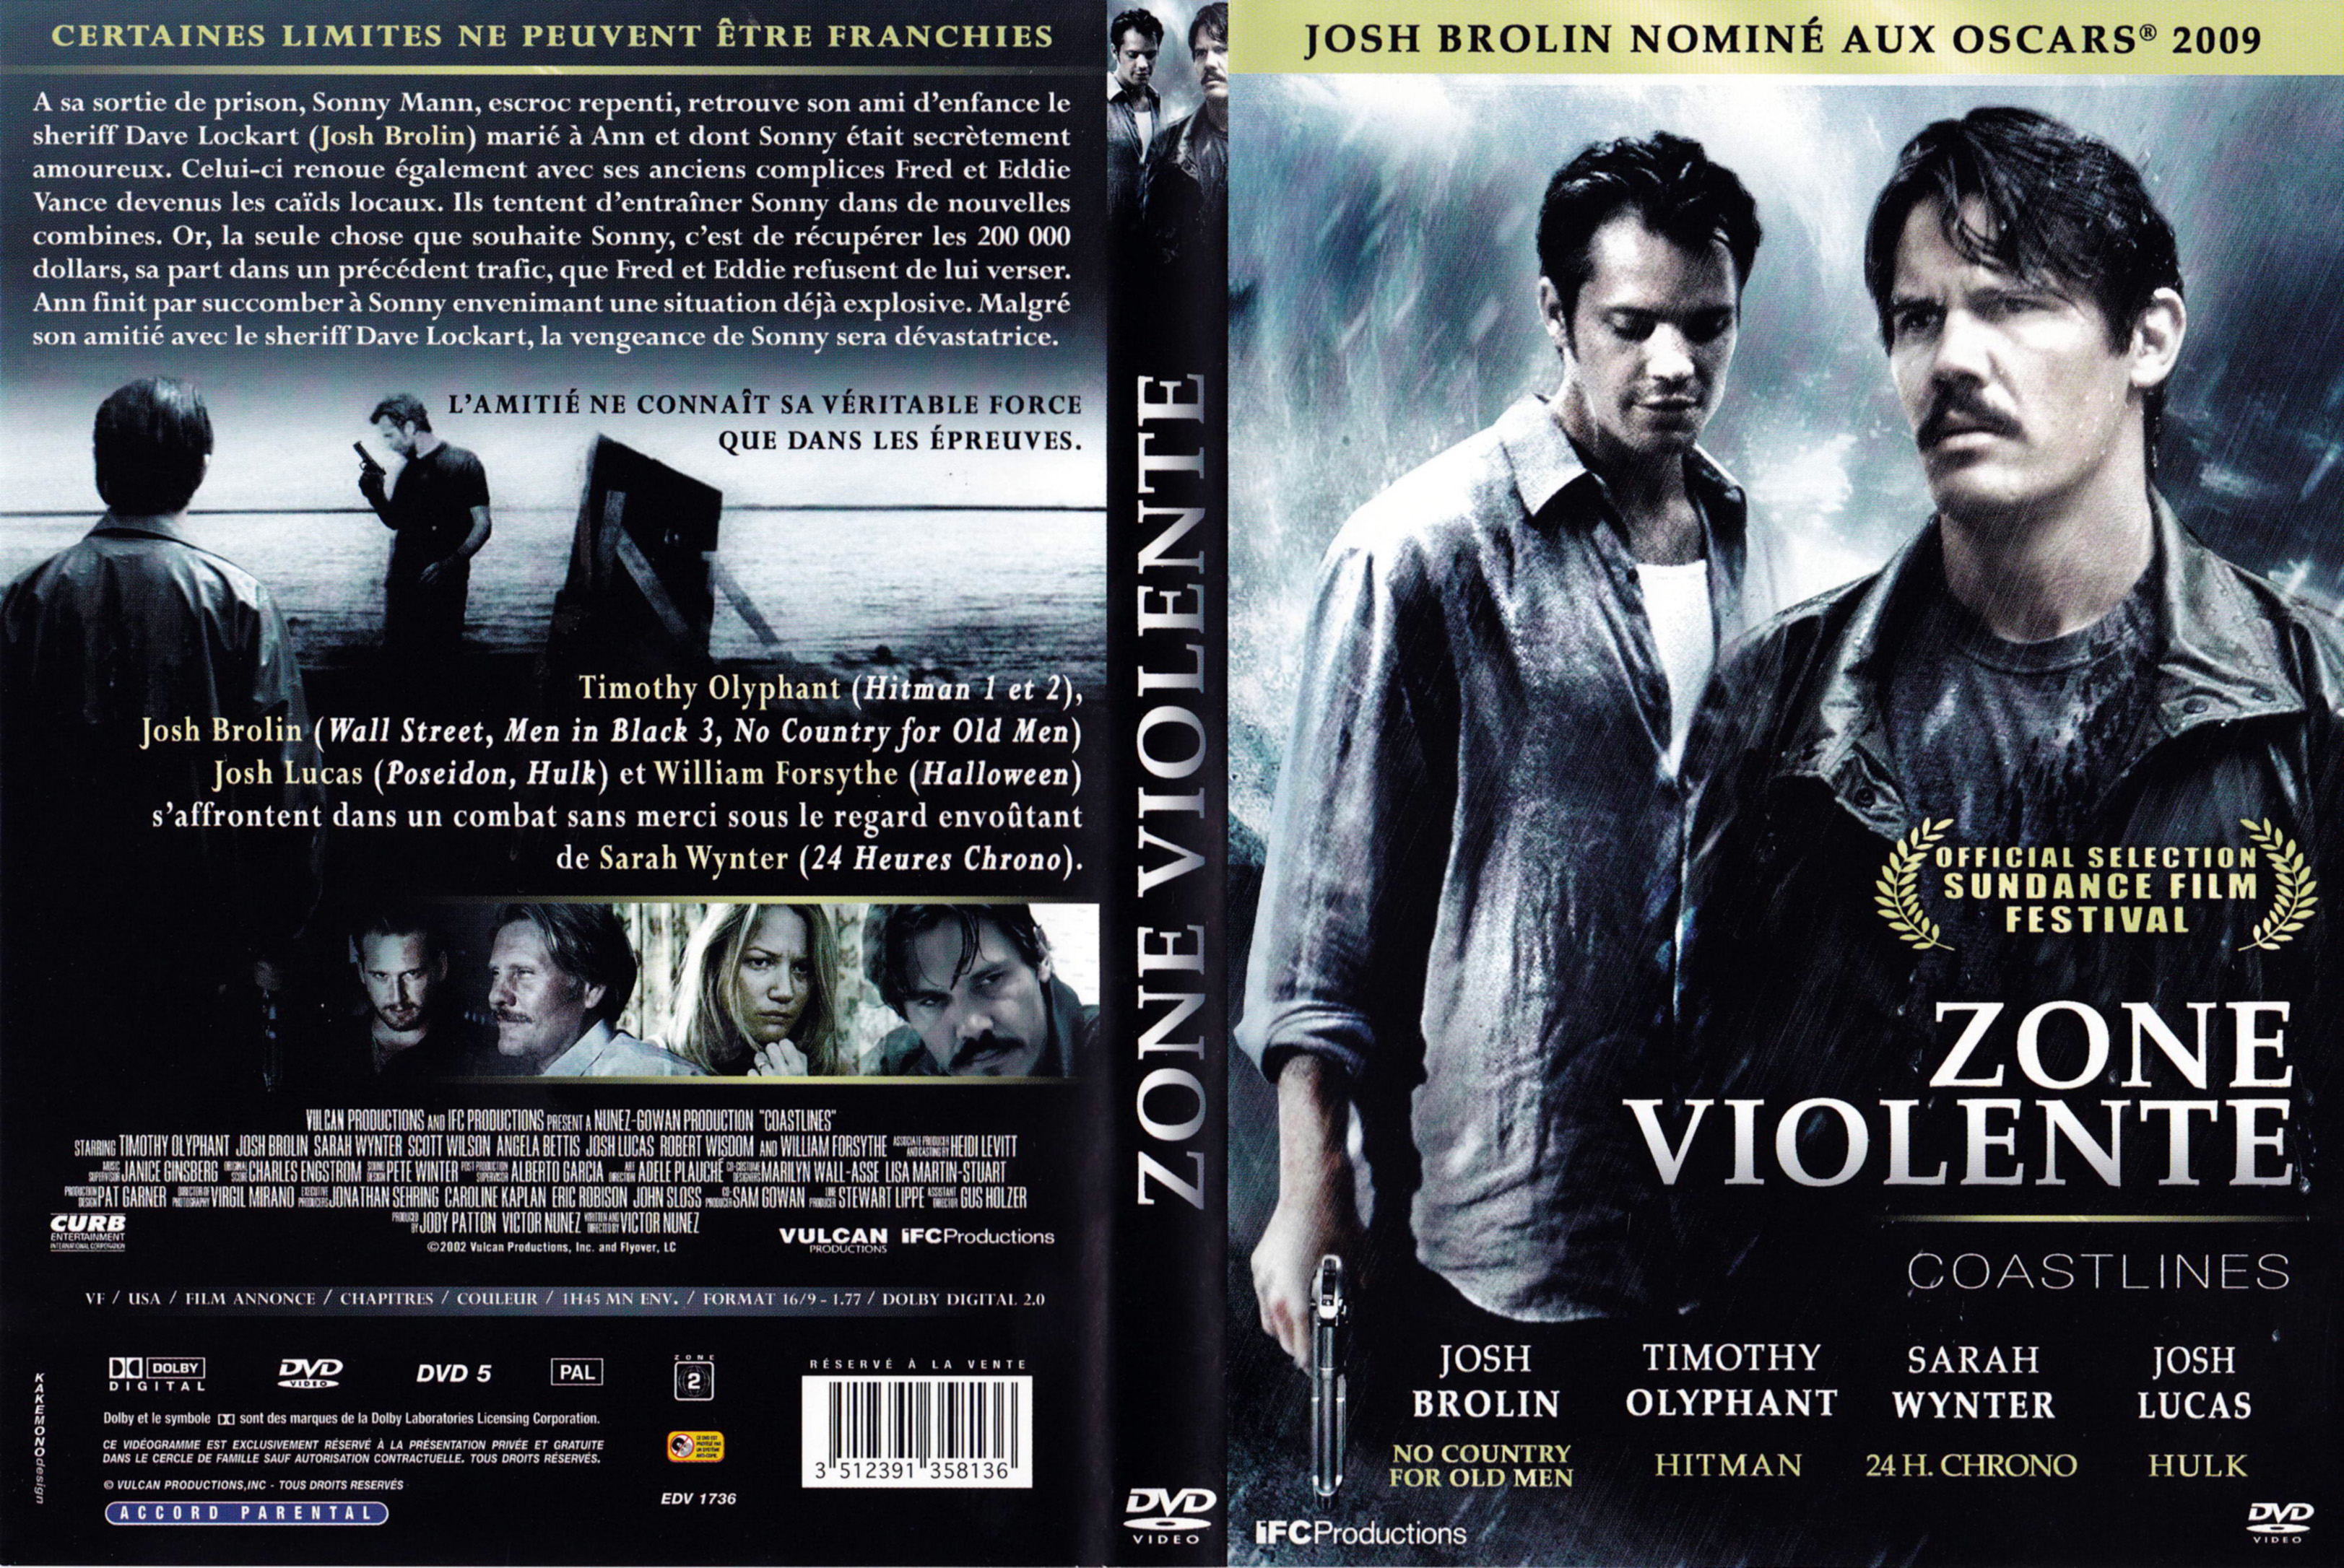 Jaquette DVD Zone violente